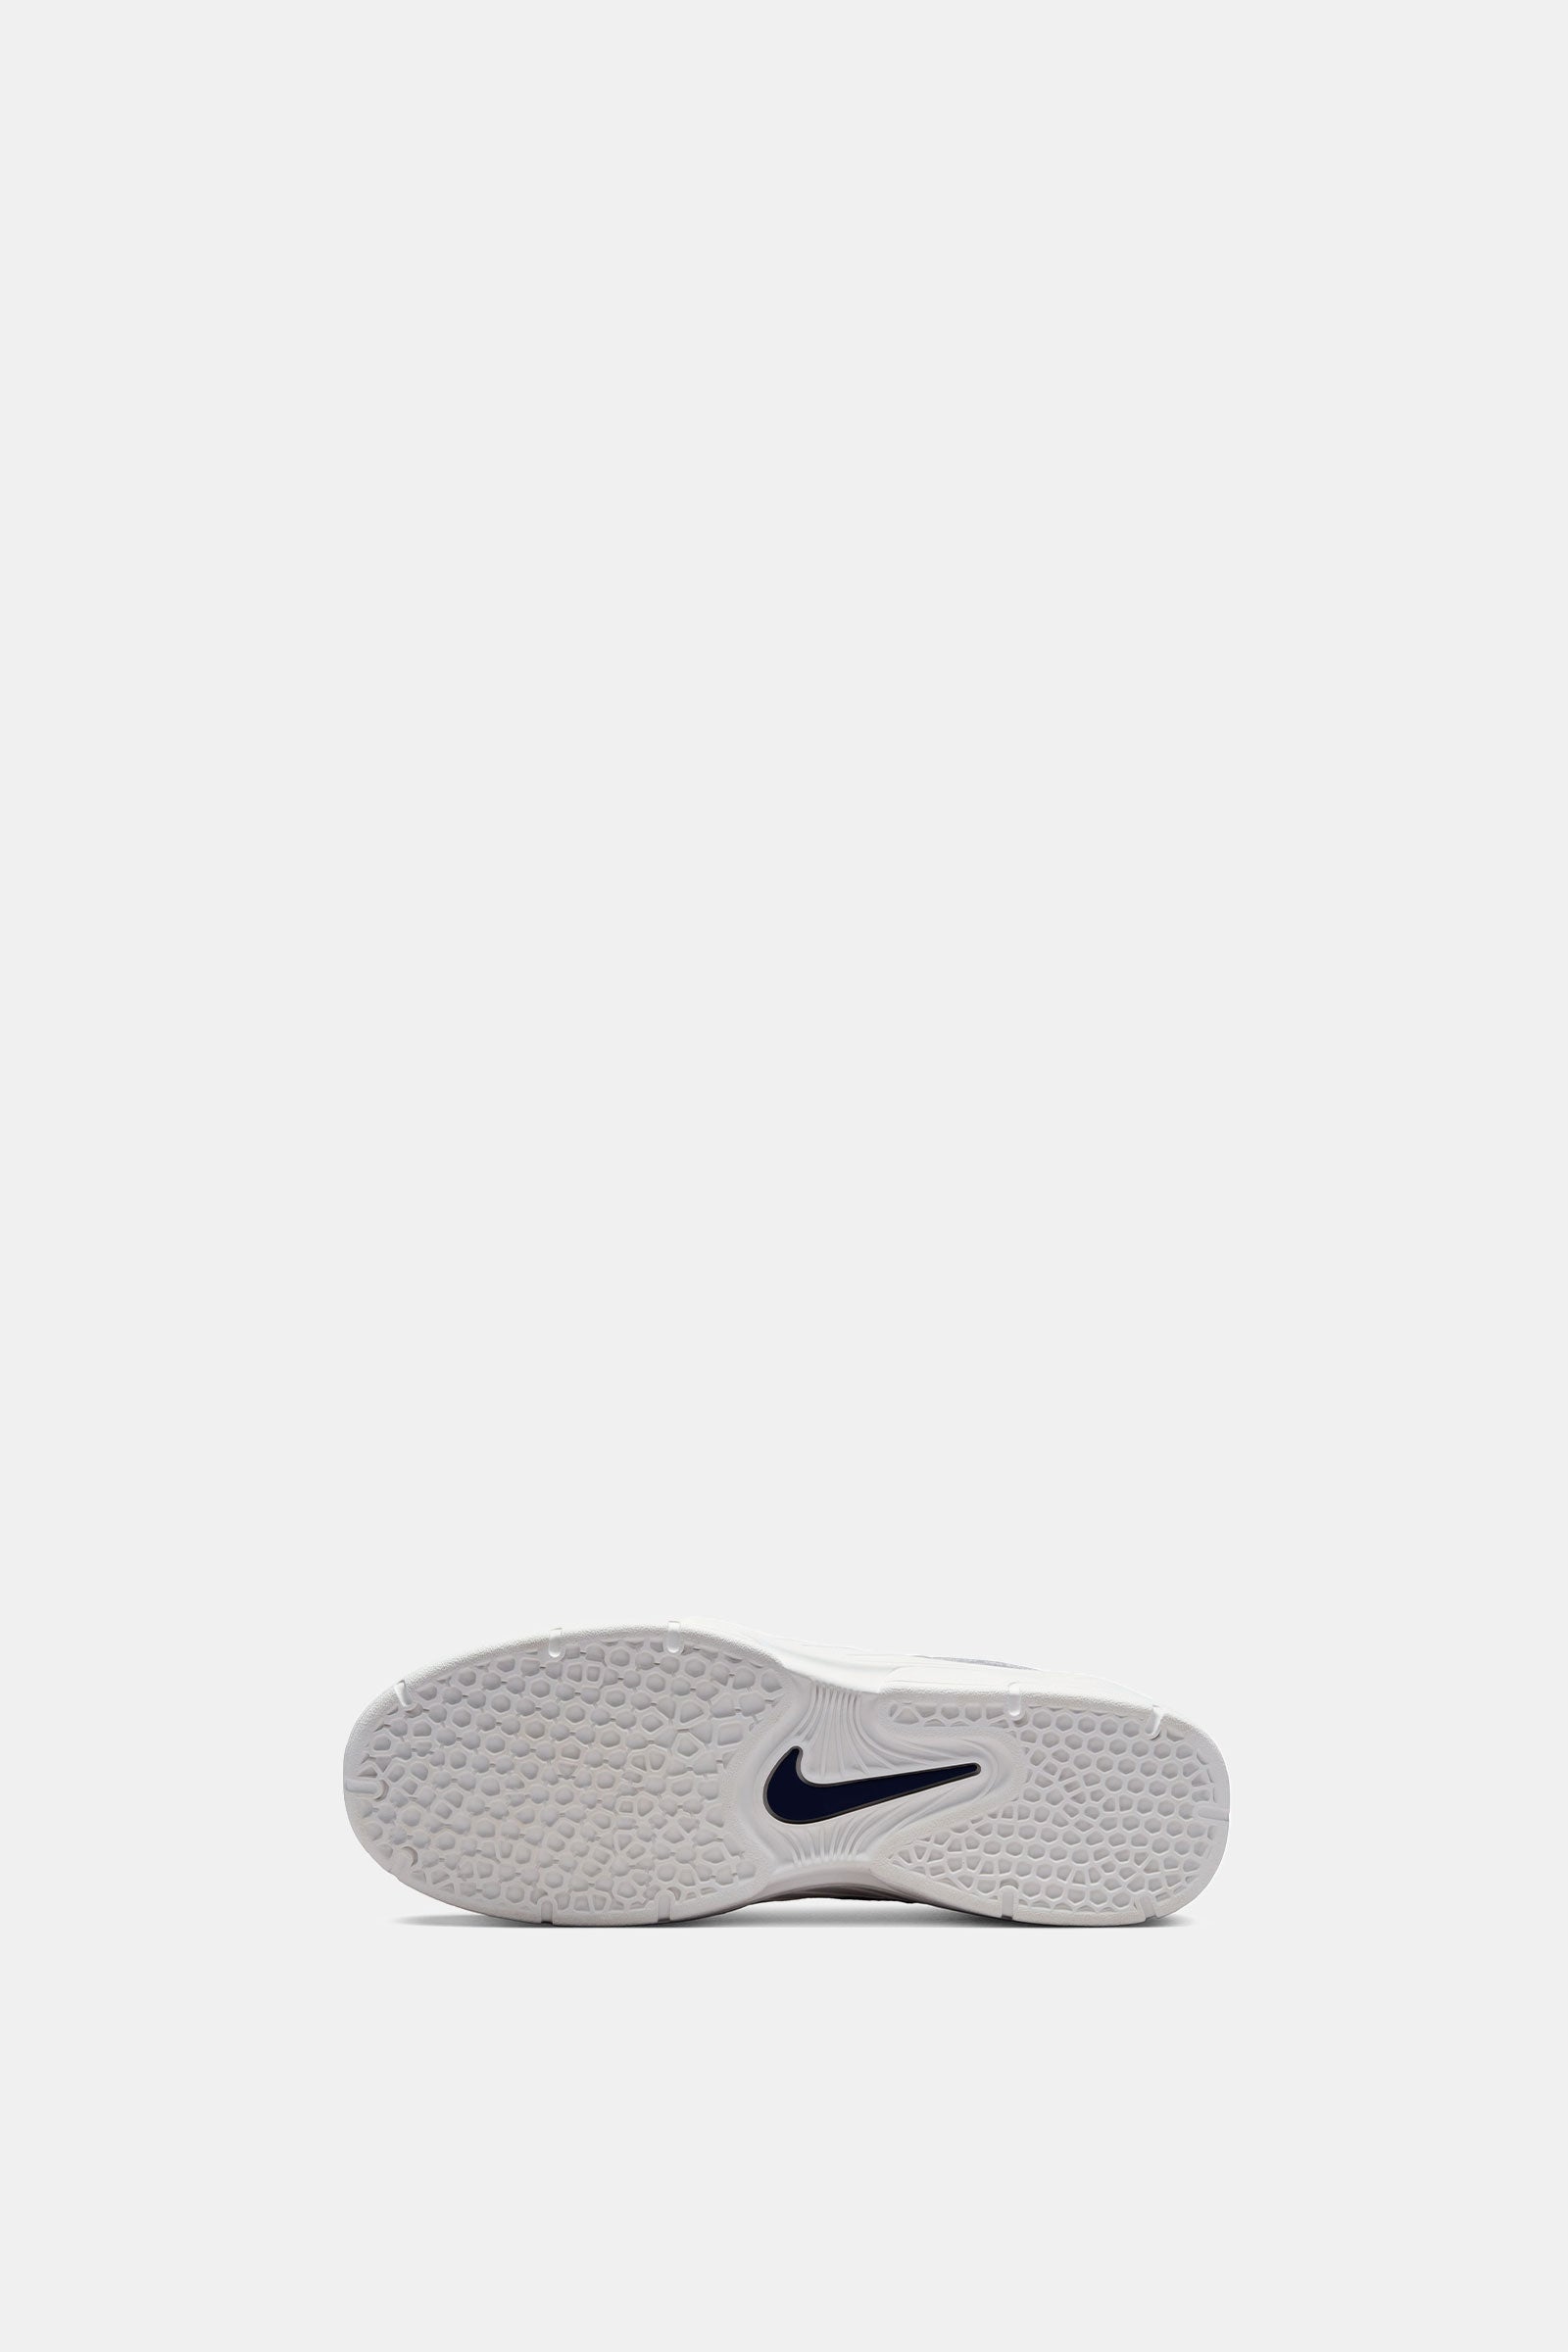 Nike SB Vertebrae